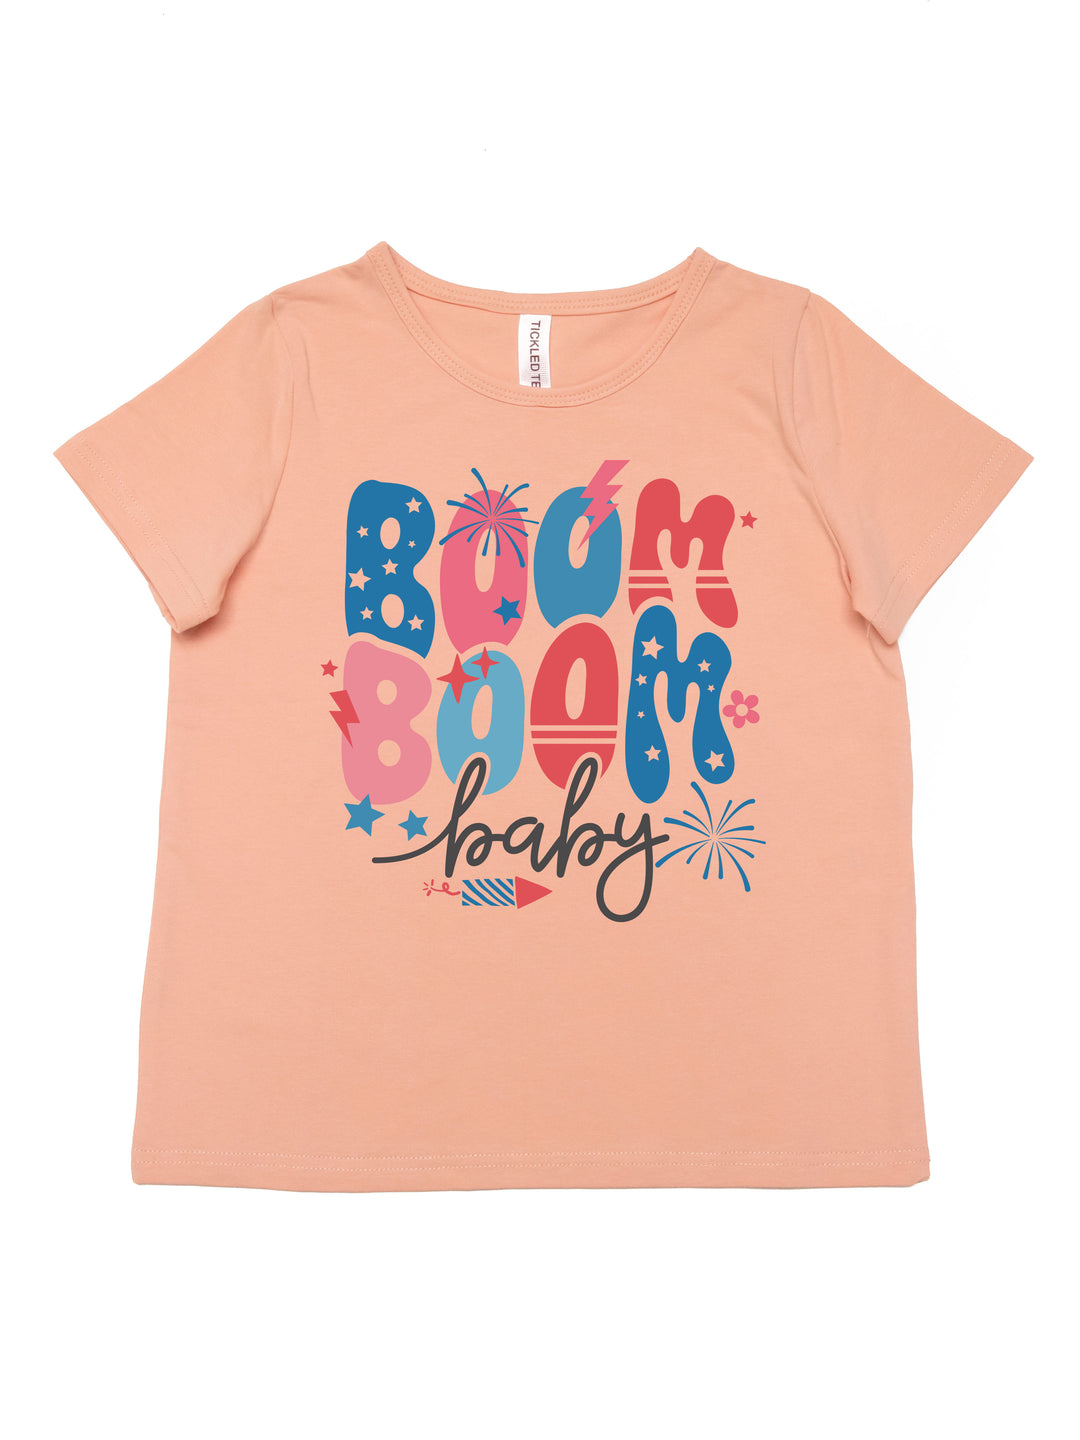 Boom Boom Baby Kids Graphic Tee